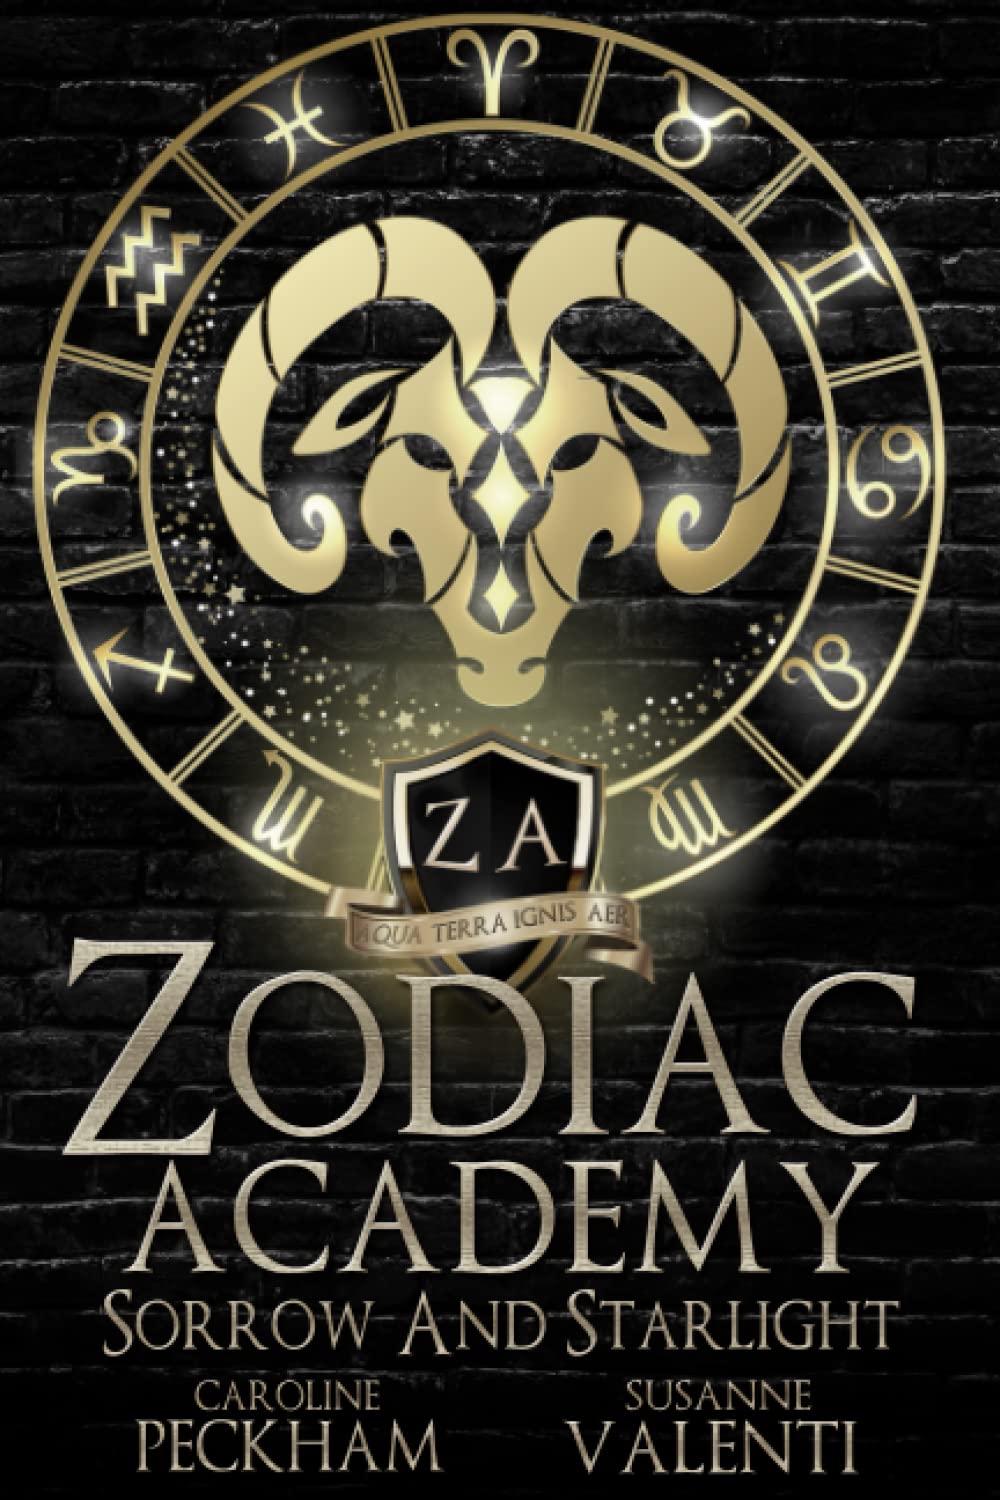 [EPUB] Zodiac Academy #8 Sorrow and Starlight by Caroline Peckham ,  Susanne Valenti